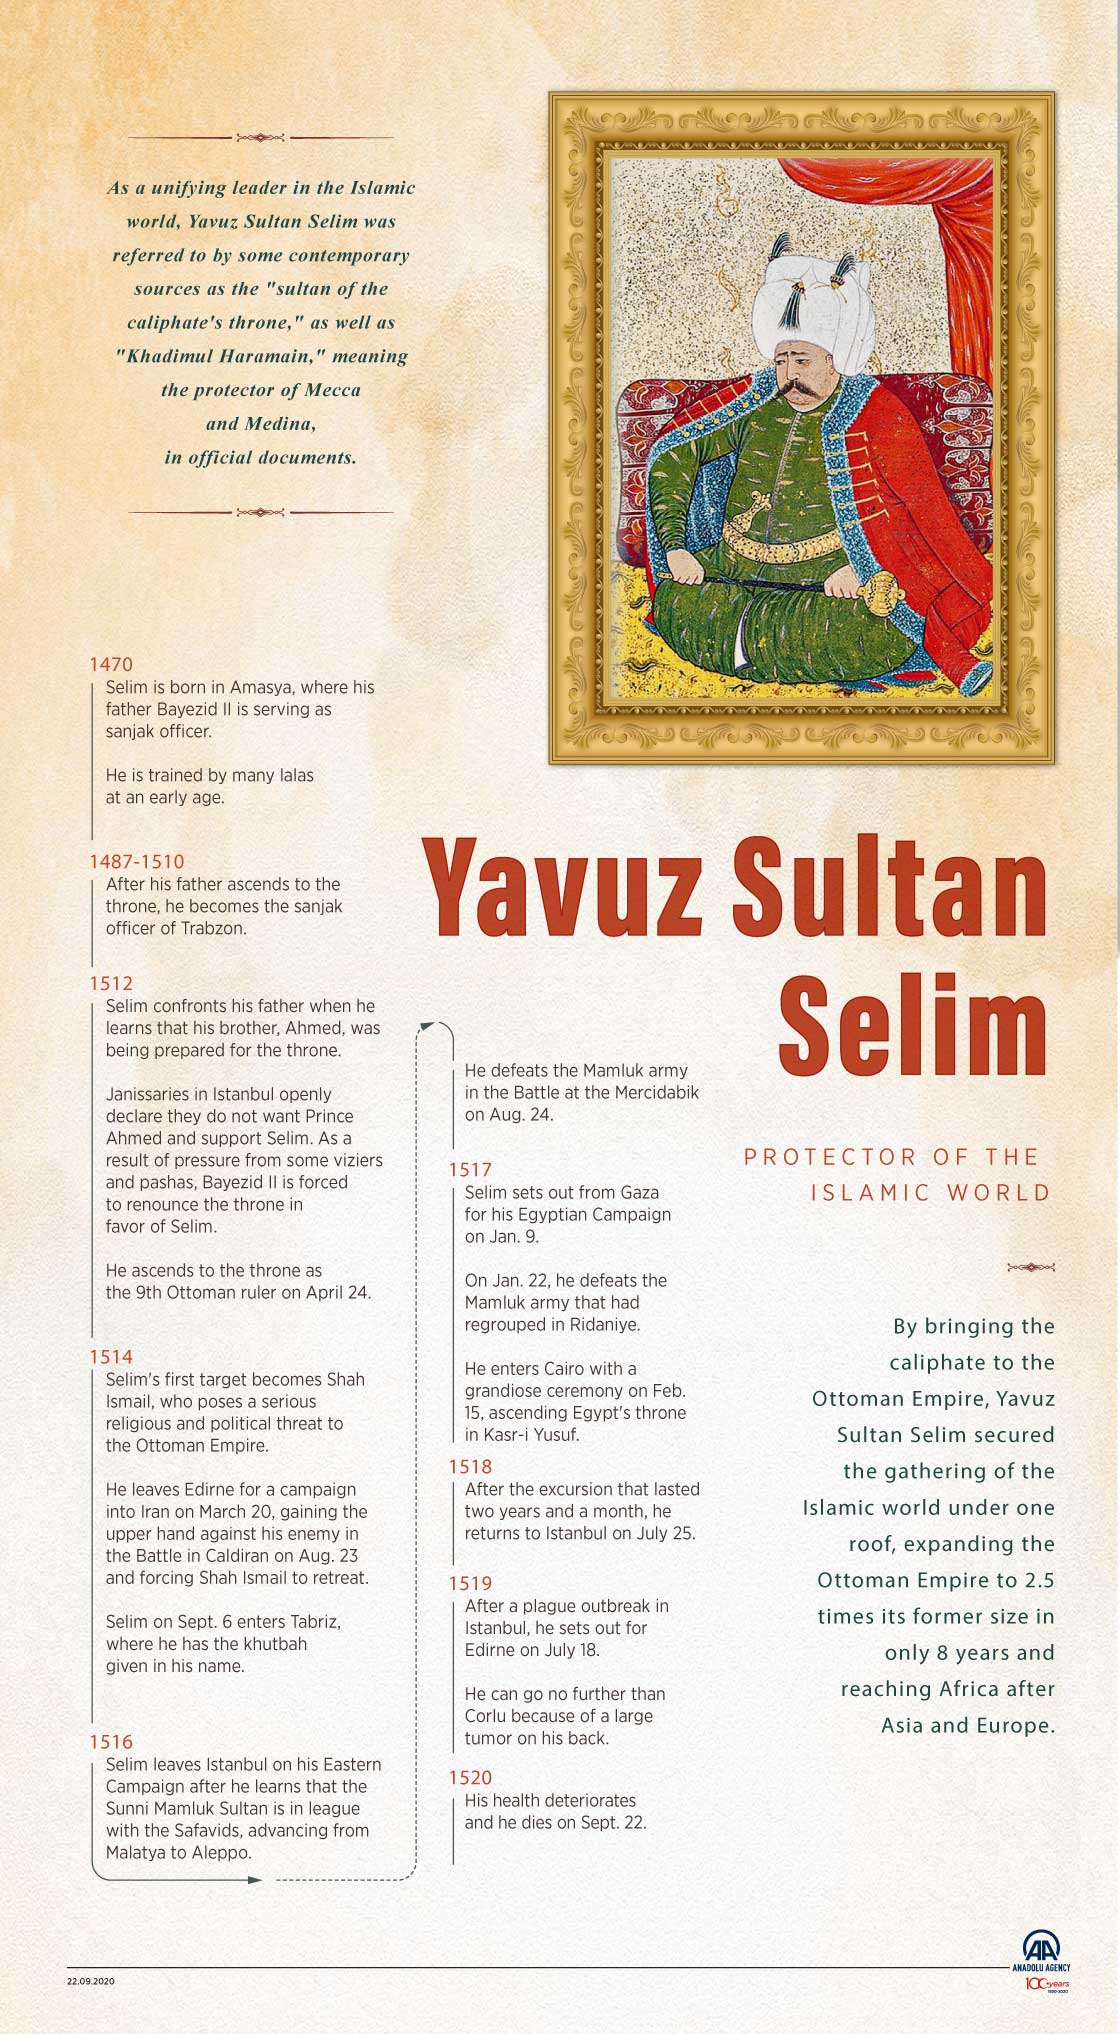 Yavuz Sultan Selim - Protector of the  IslamIc World